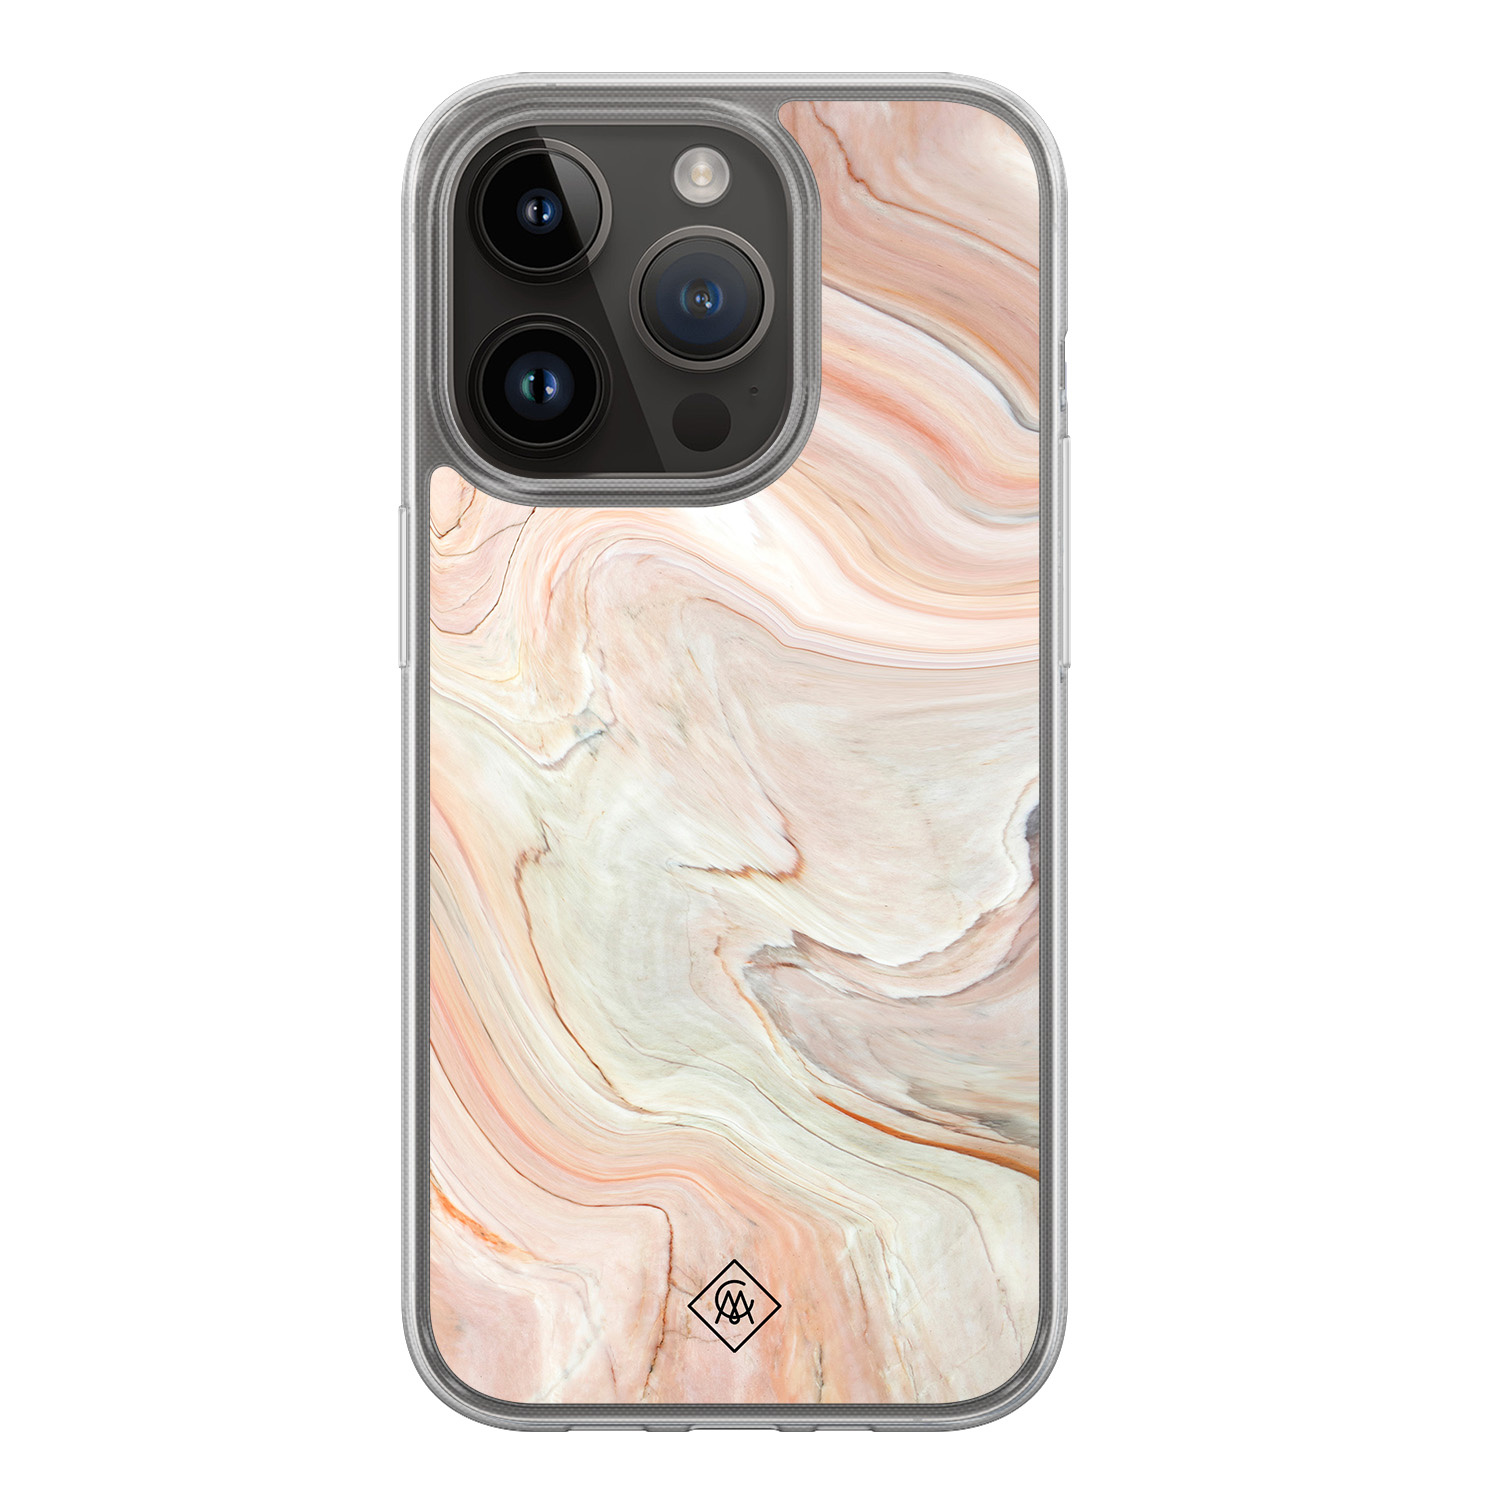 iPhone 13 Pro hoesje siliconen - Marmer waves - Casimoda® 2-in-1 case hybride - Schokbestendig - Water - Verhoogde randen - Bruin/beige, Transparant